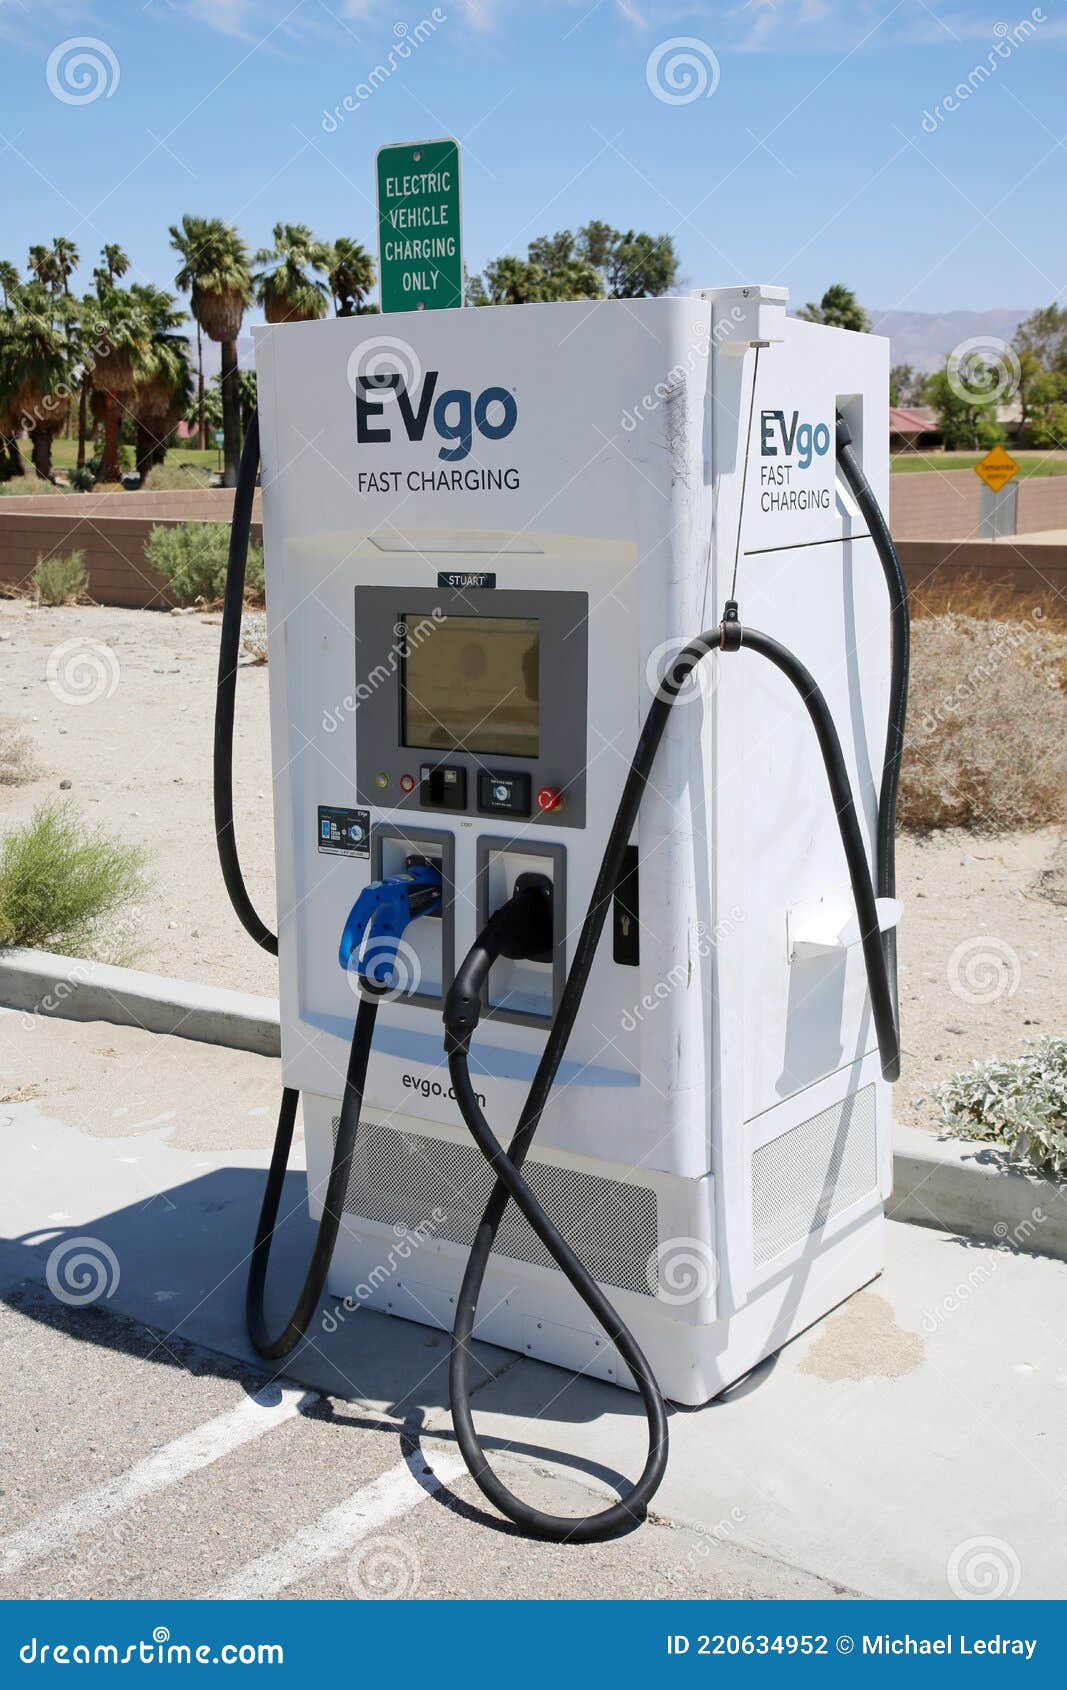 palm-springs-california-june-6-2021-electric-car-charging-station